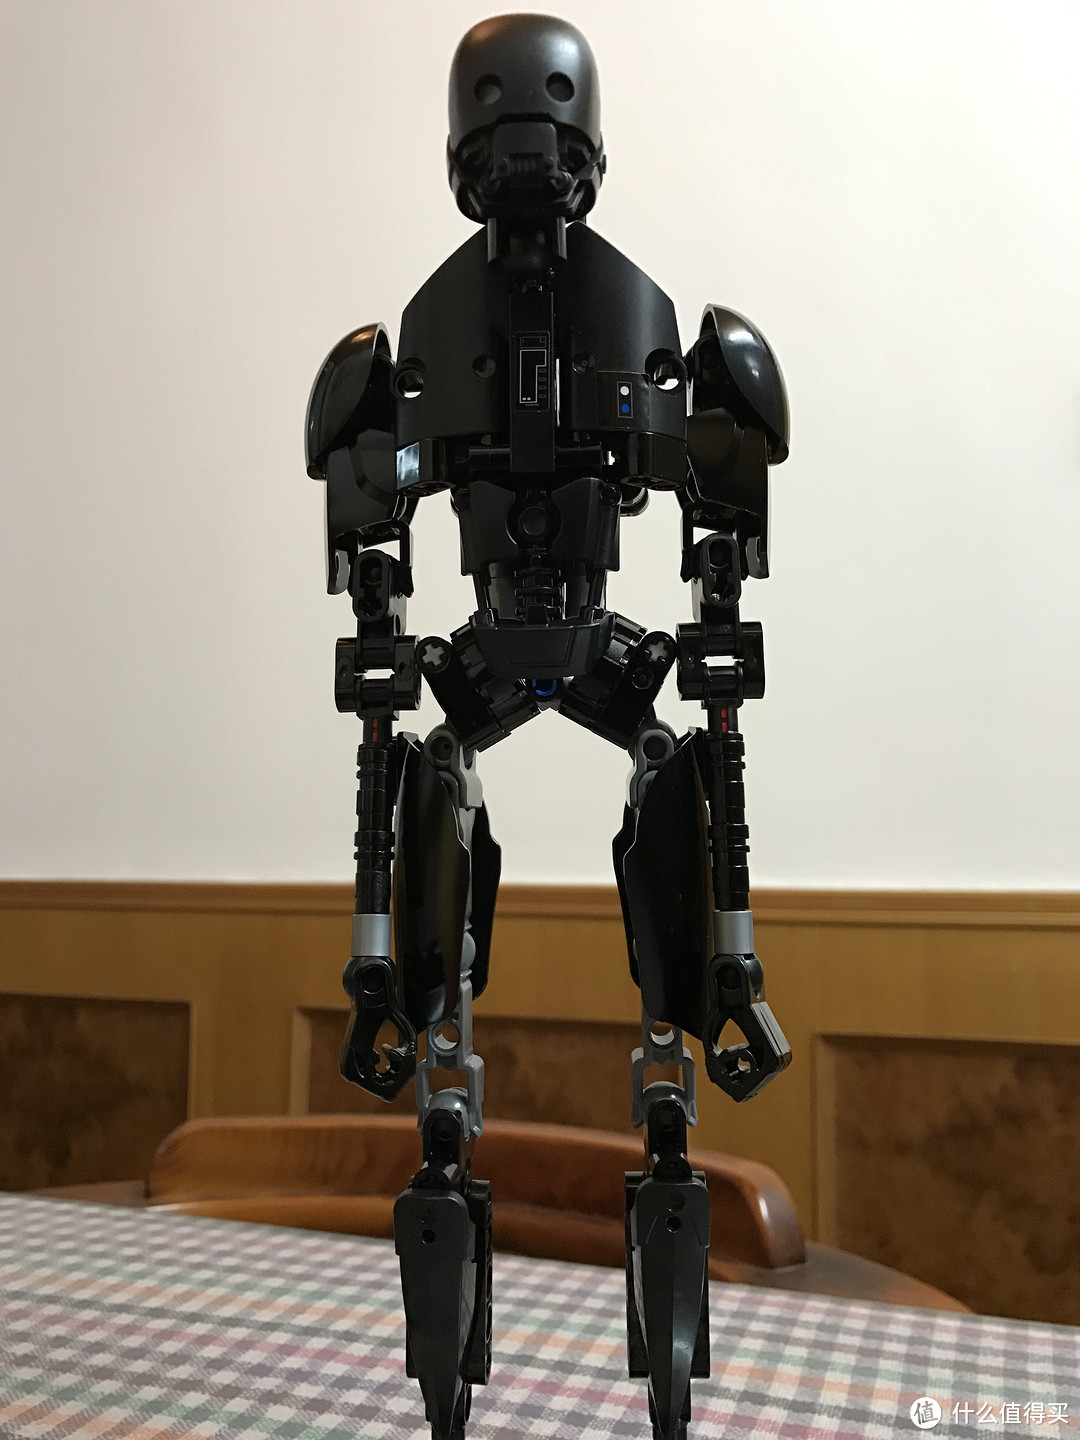 LEGO 乐高 75120 拼装玩具 侠盗一号呆萌机器人K-2SO